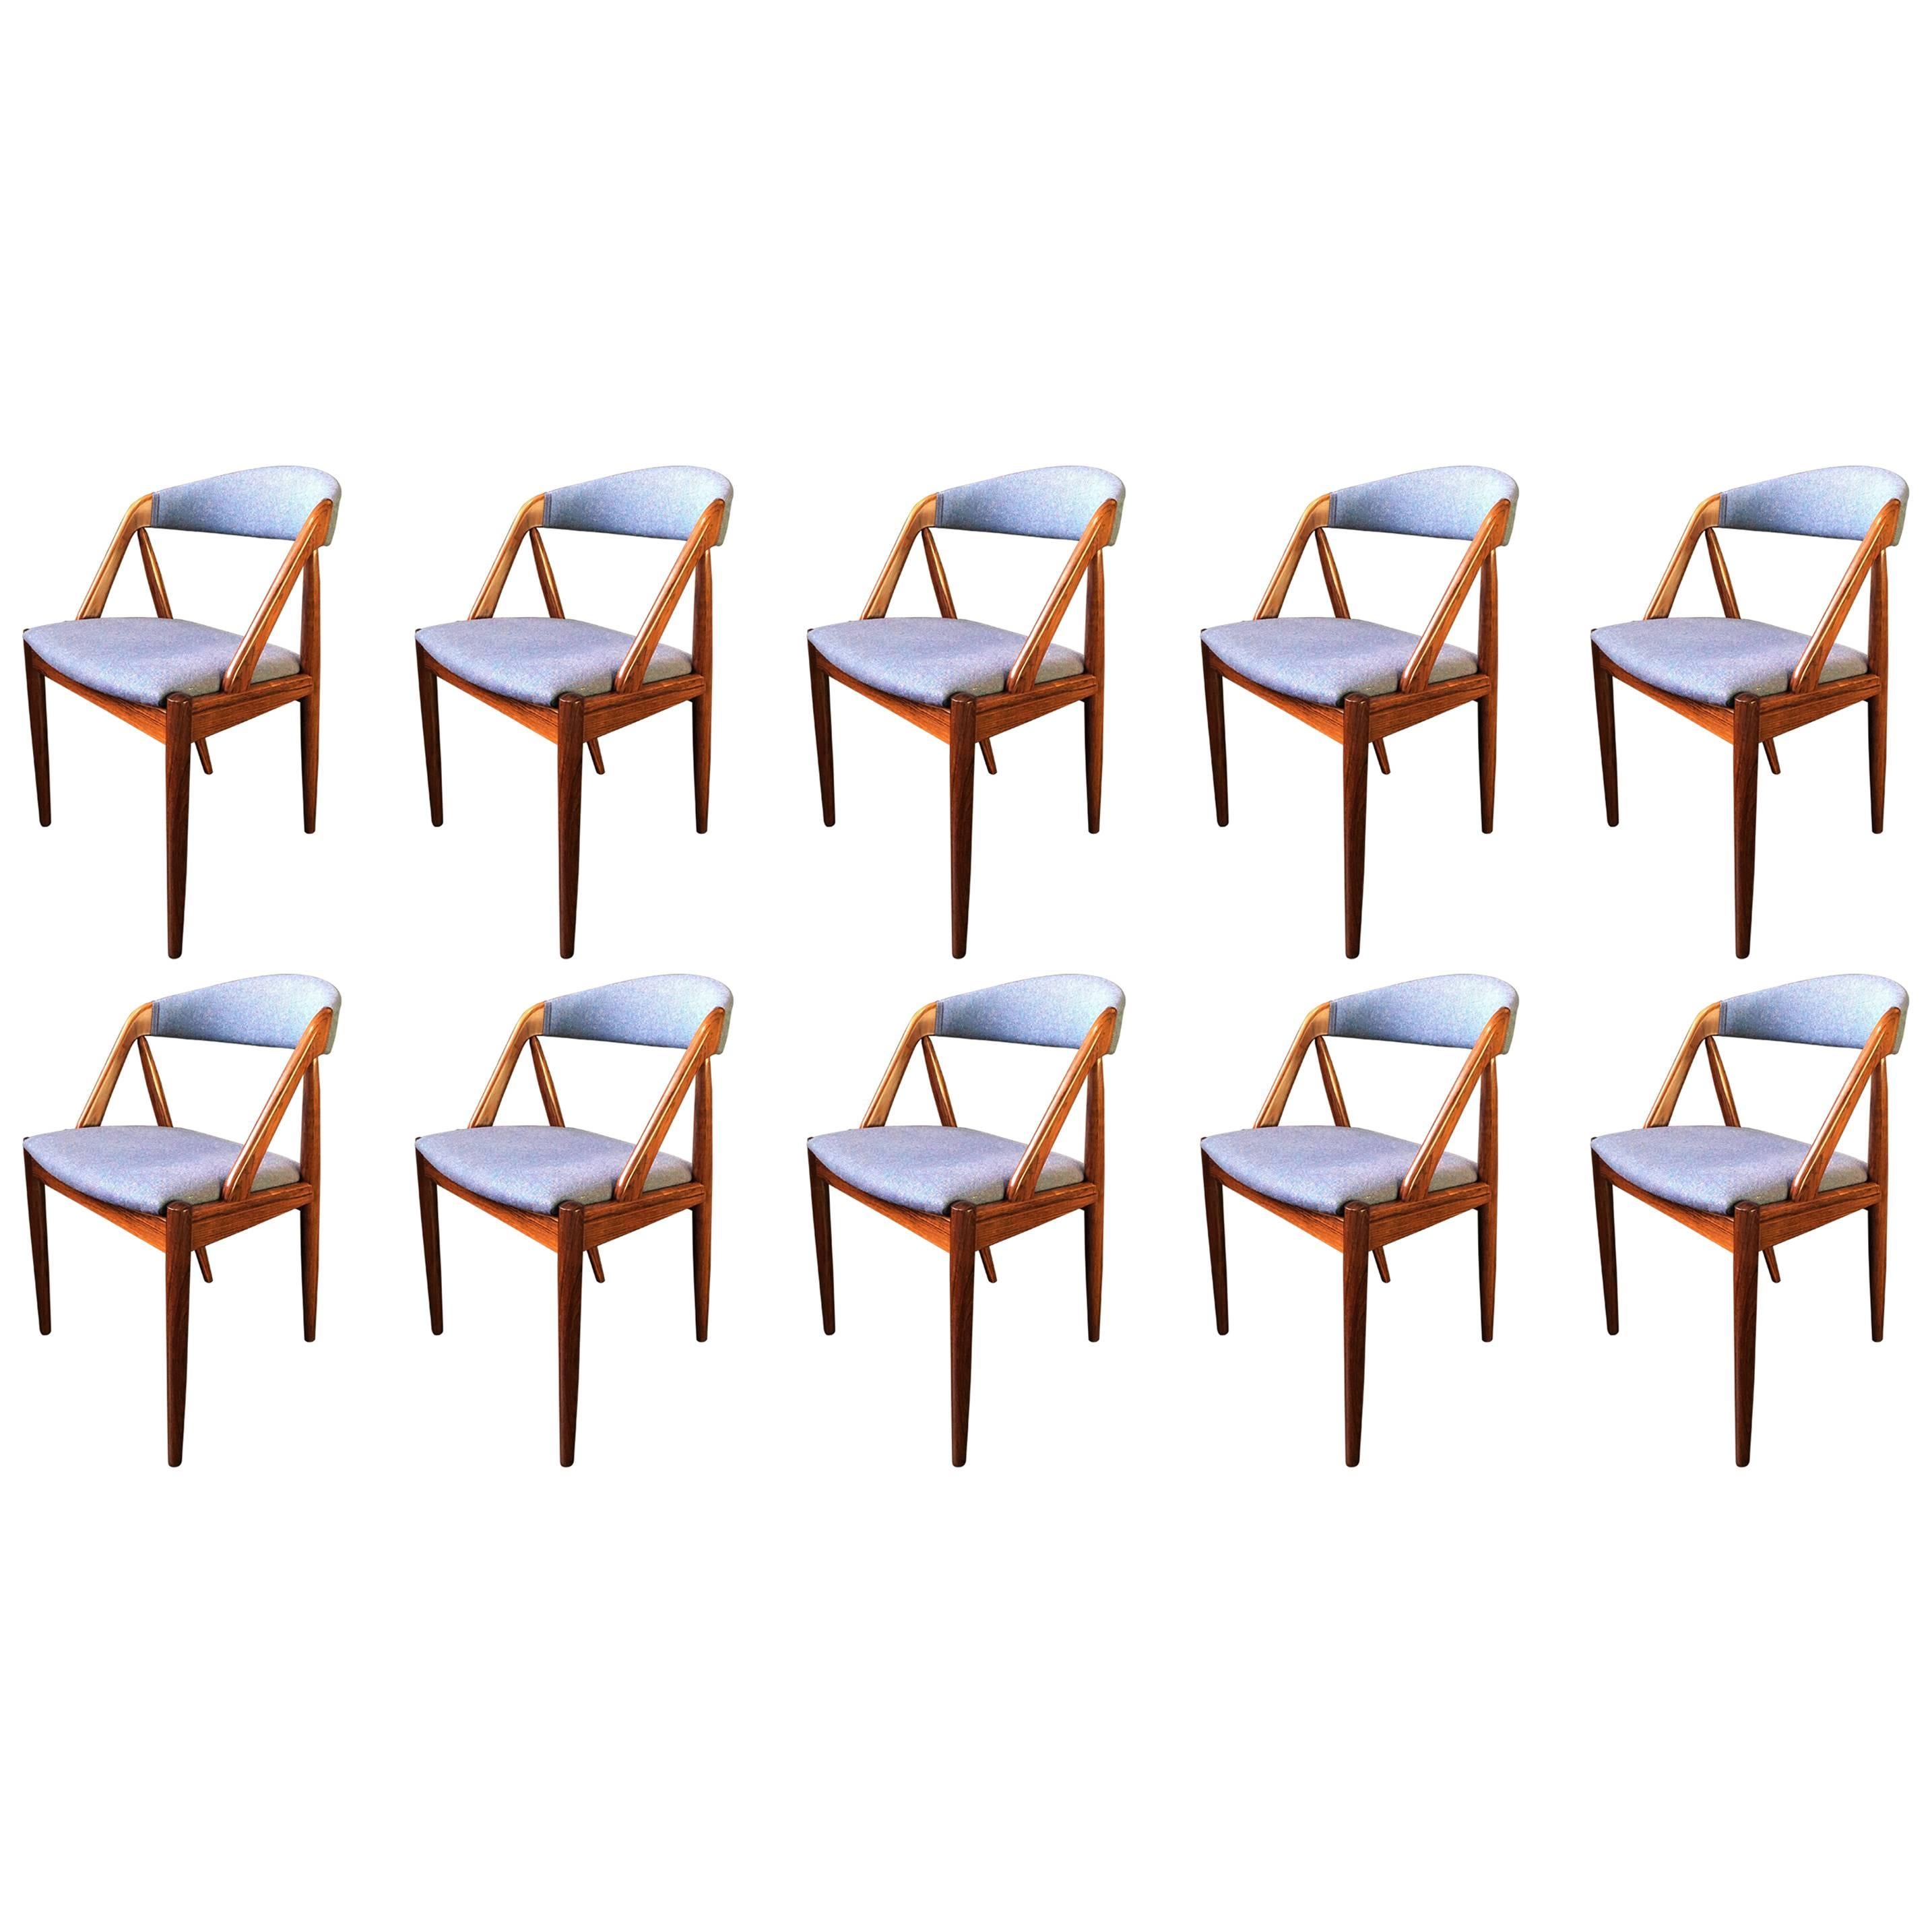 Kai Kristiansen Rosewood Model 31 Chairs, Reupholstered, Set of 10.